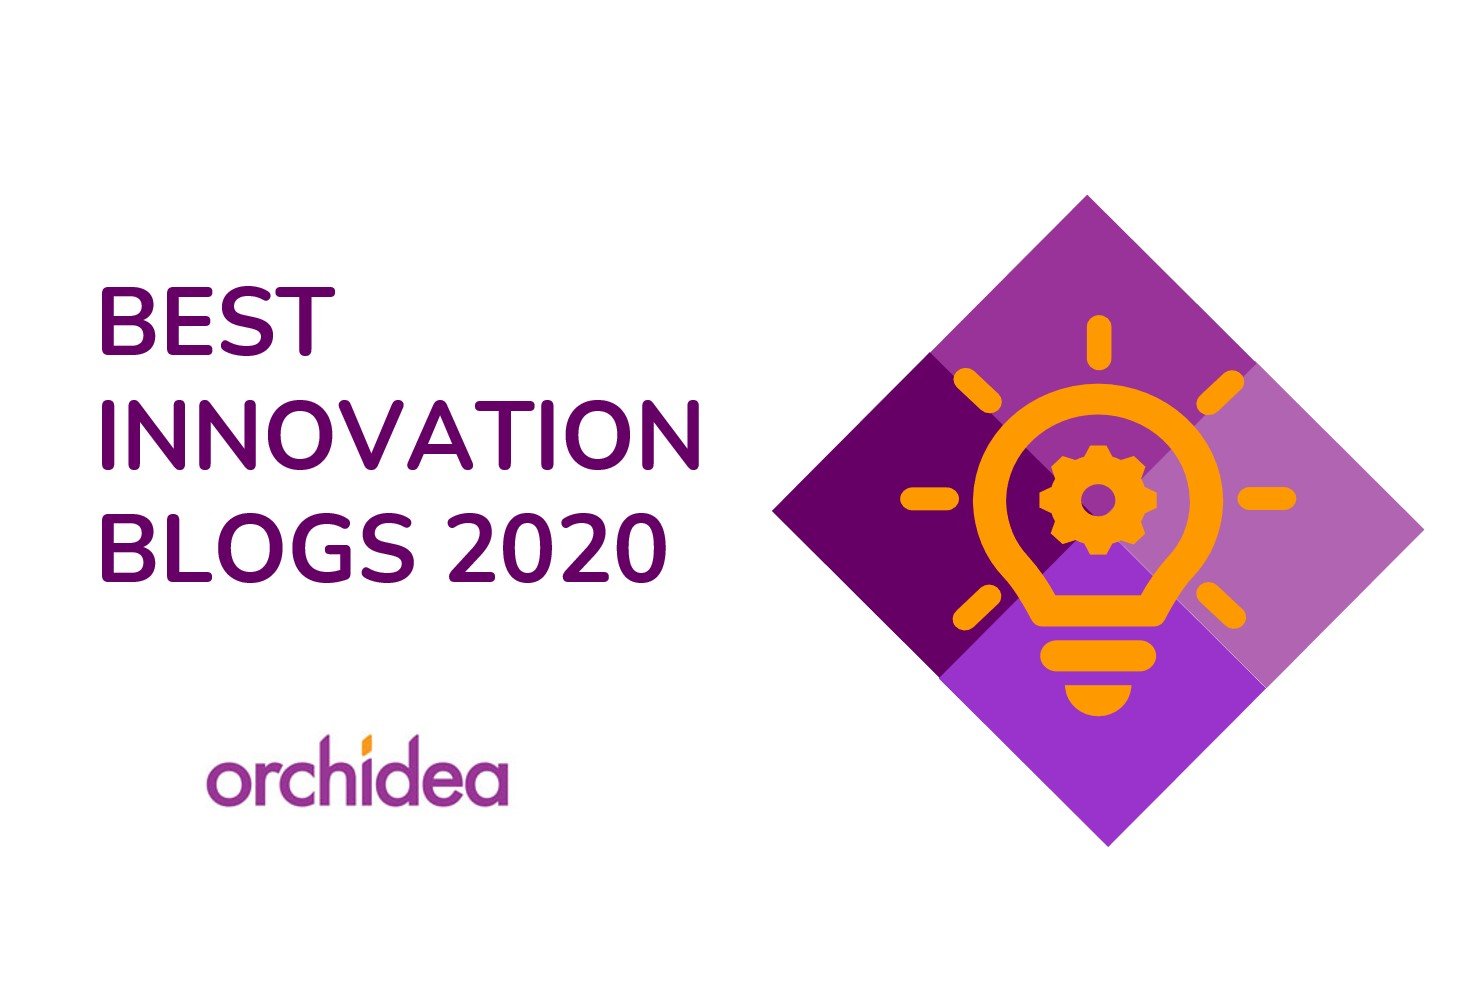 Best innovation blogs 2020